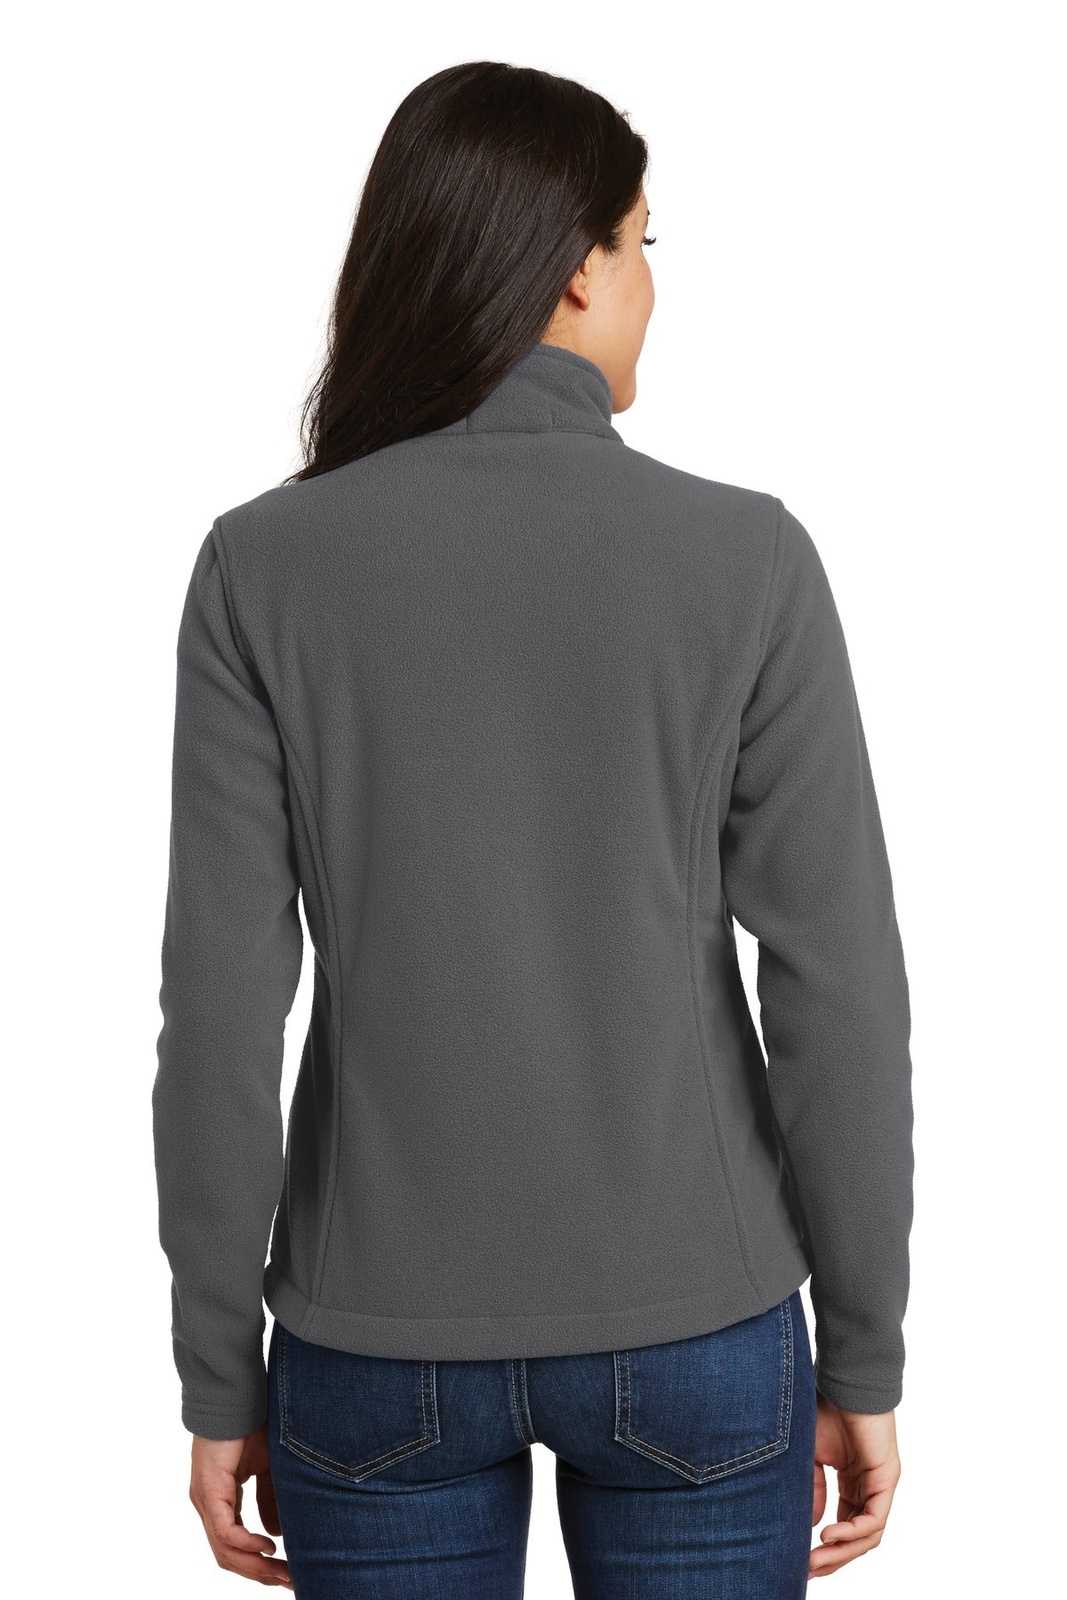 Port Authority L217 Ladies Value Fleece Jacket - Iron Gray - HIT a Double - 1